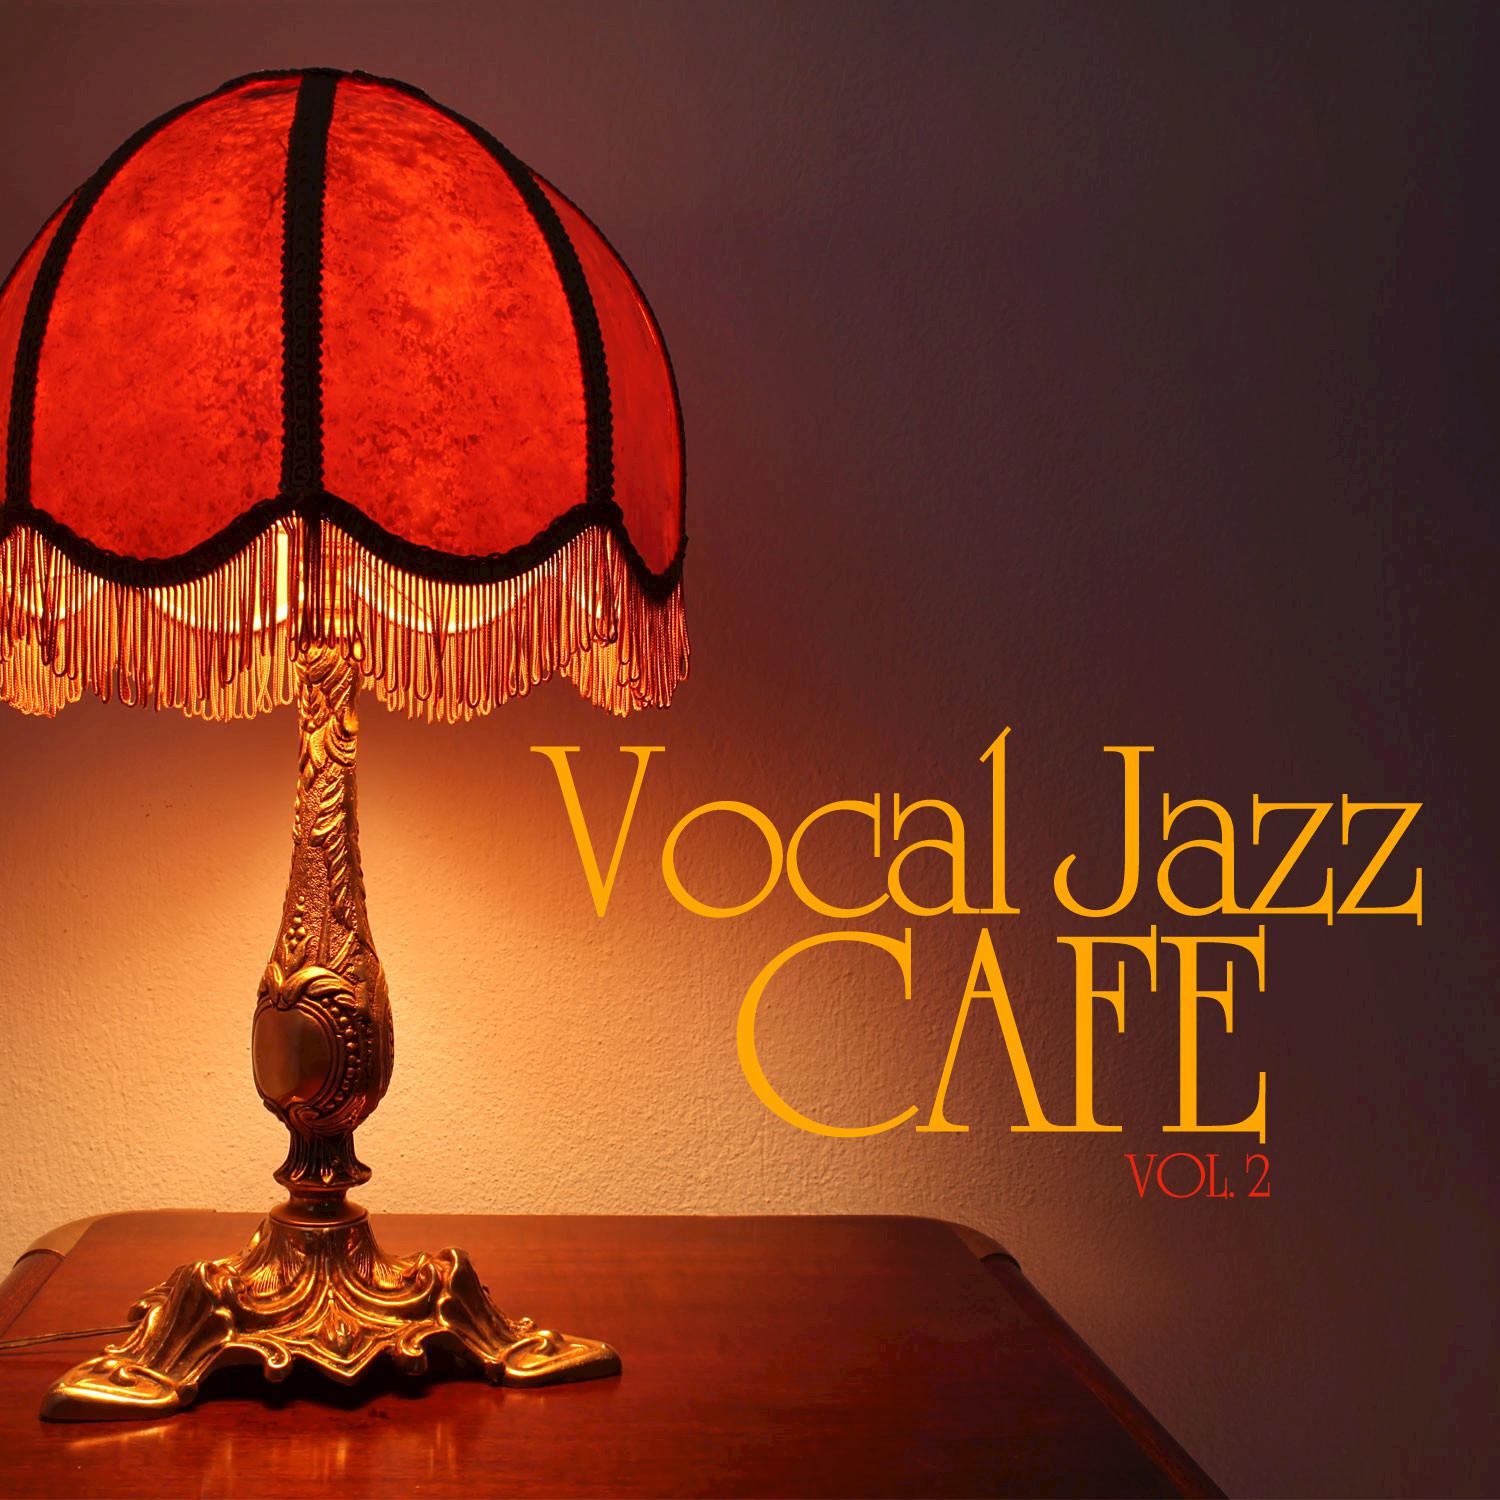 Vocal Jazz Cafe, Vol. 2